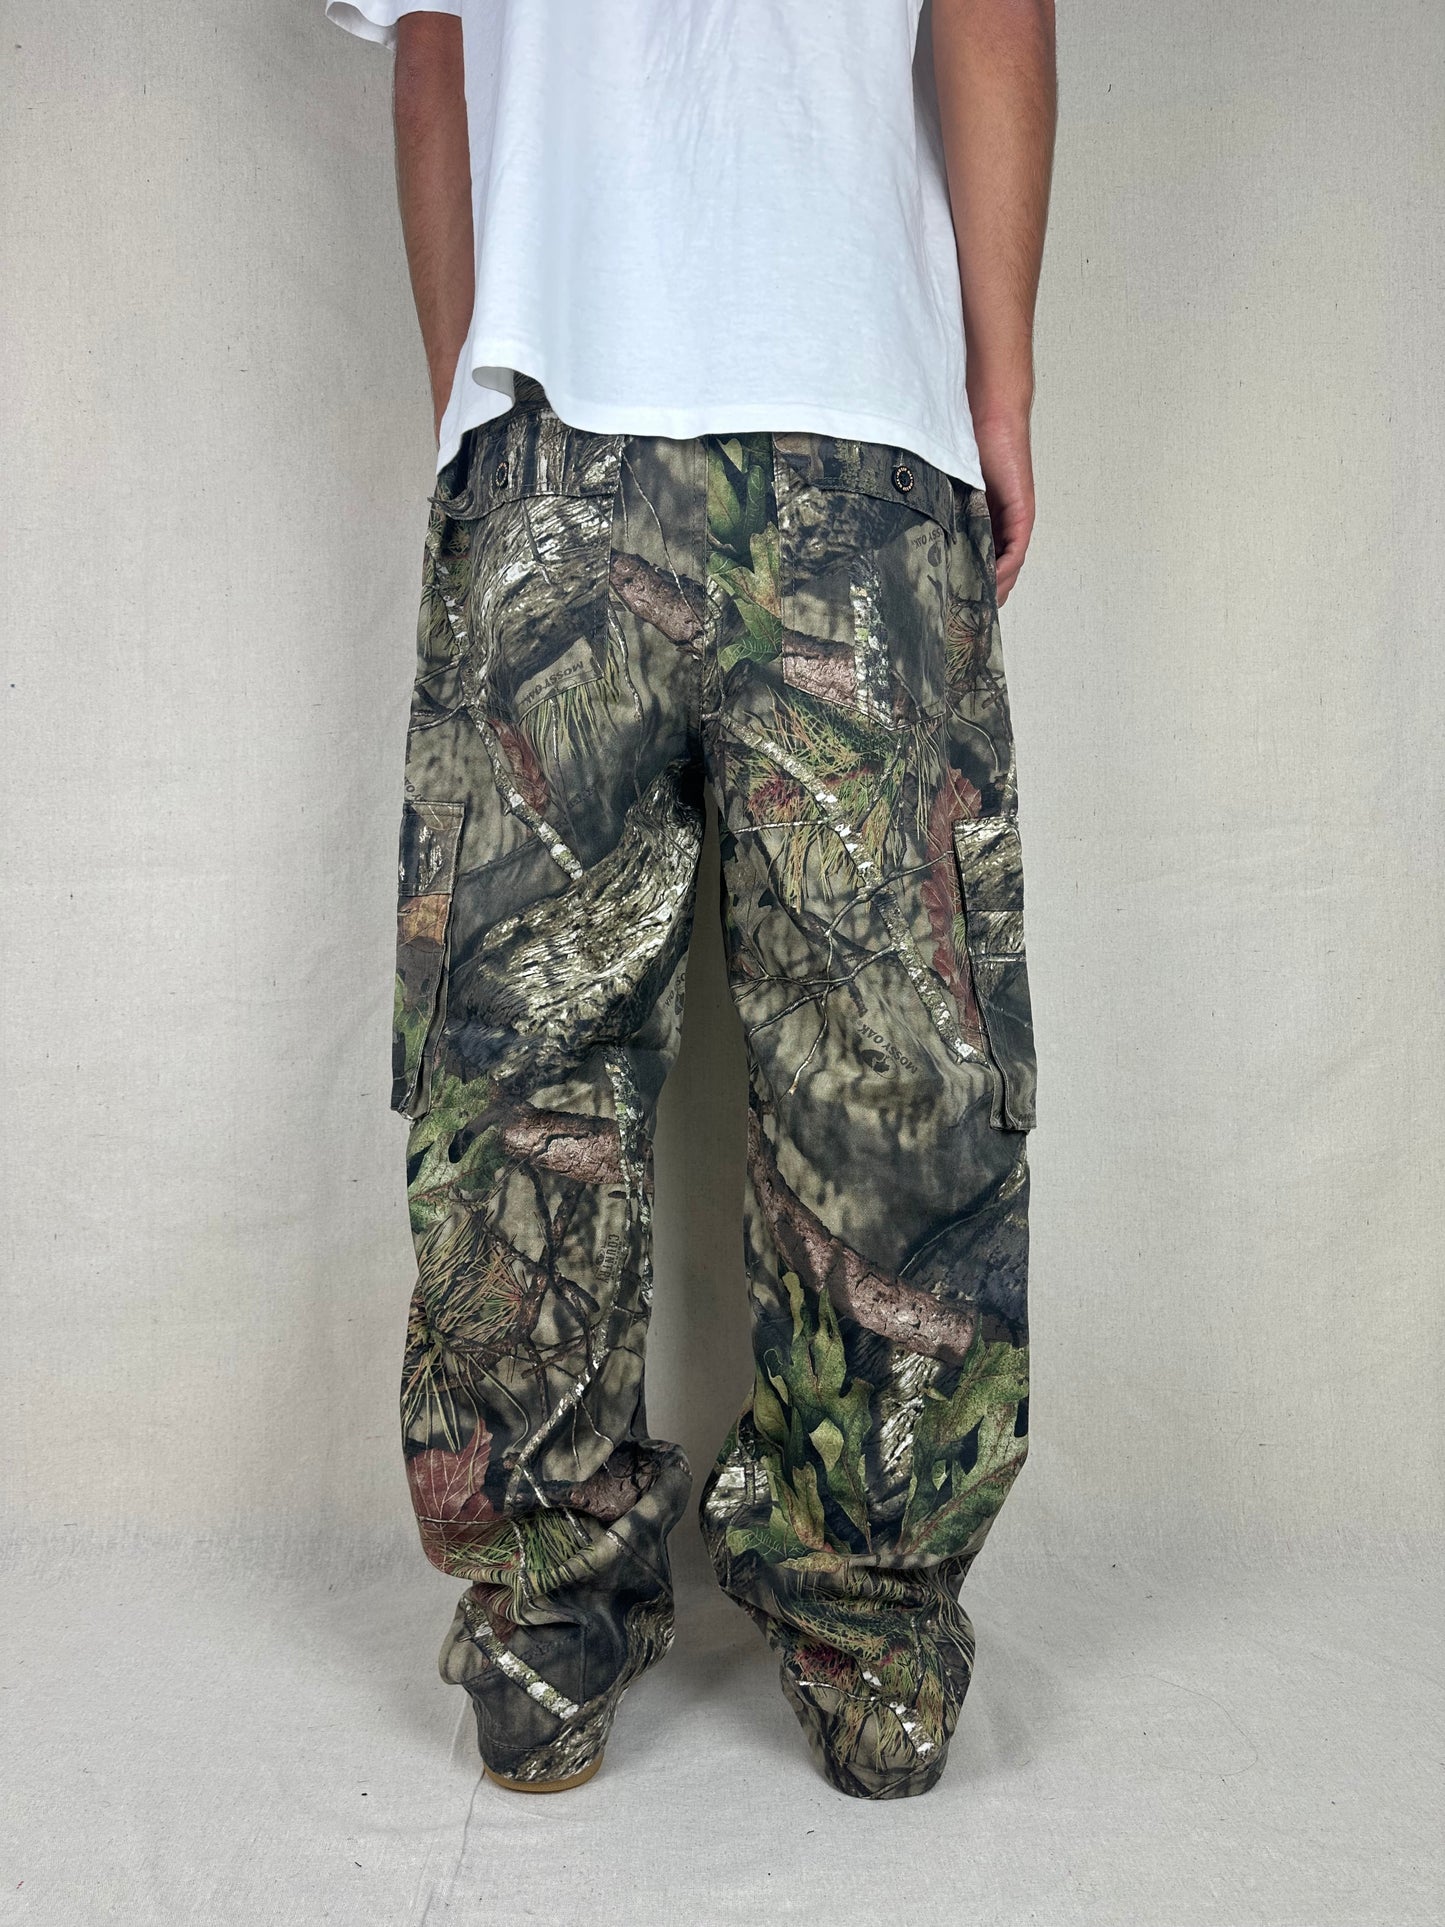 90's Mossyoak Realtree Camo Vintage Cargo Pants Size 36/38x32